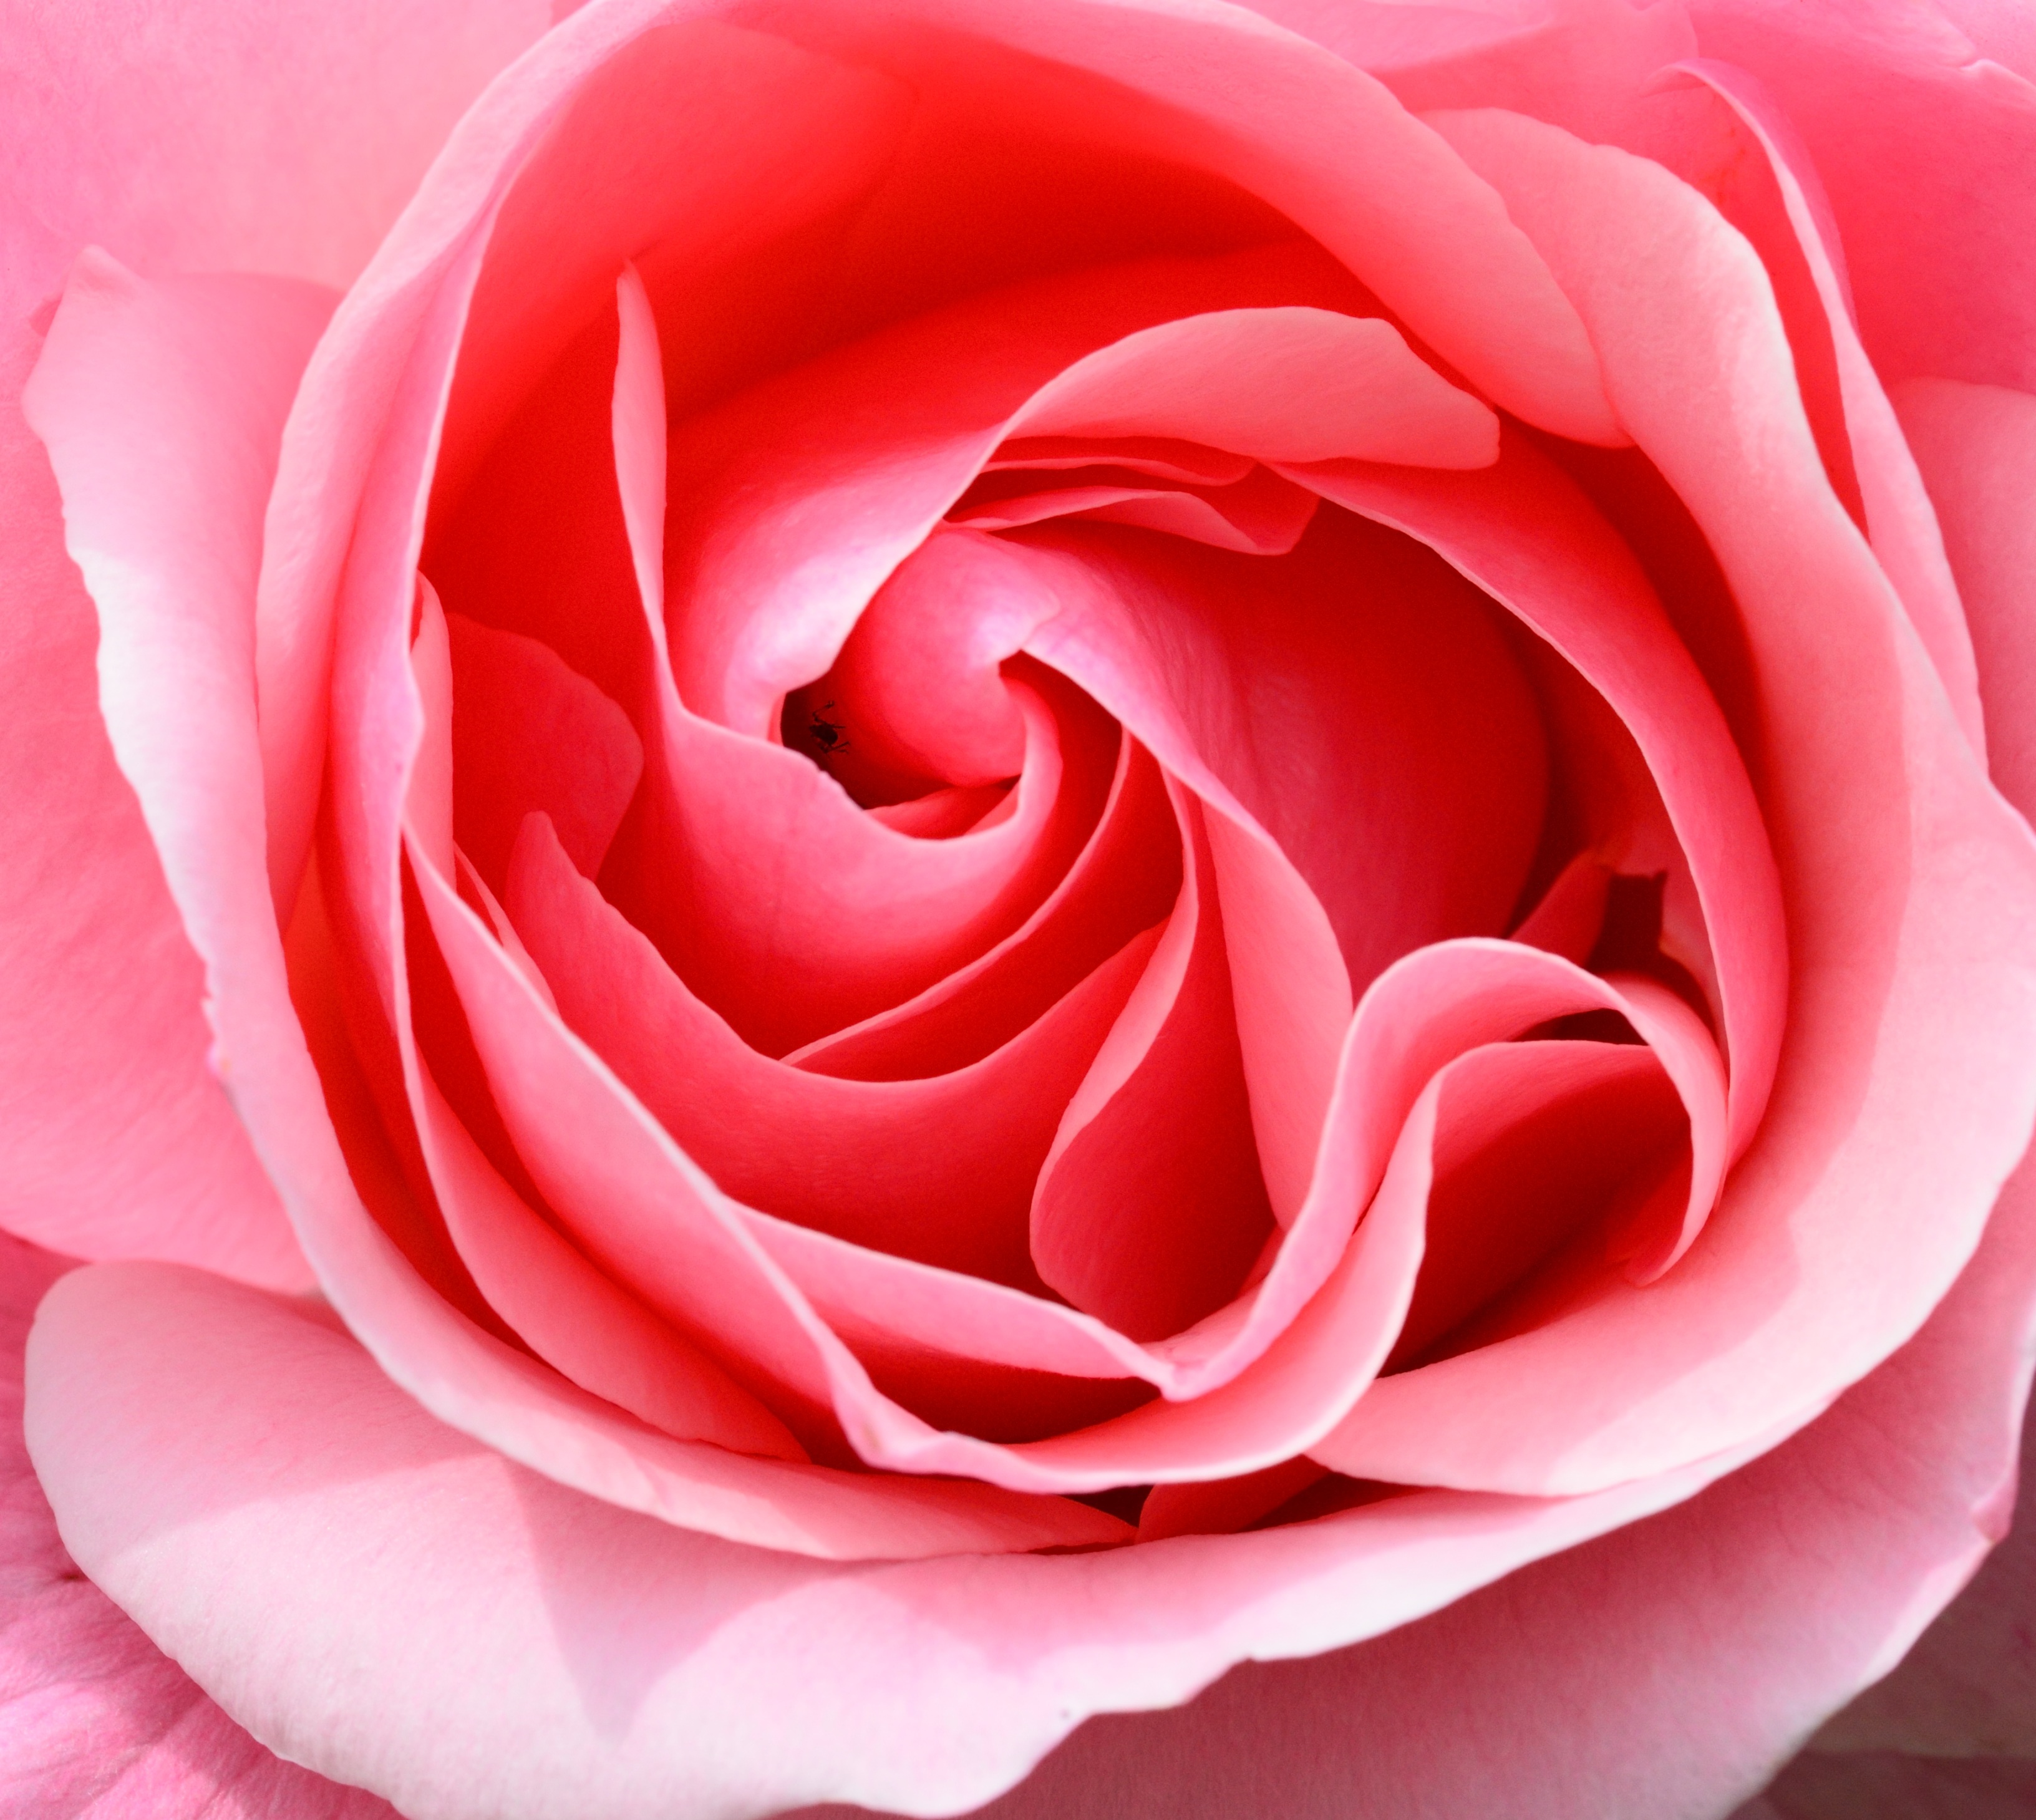 rose-pink-petals-flower.jpg